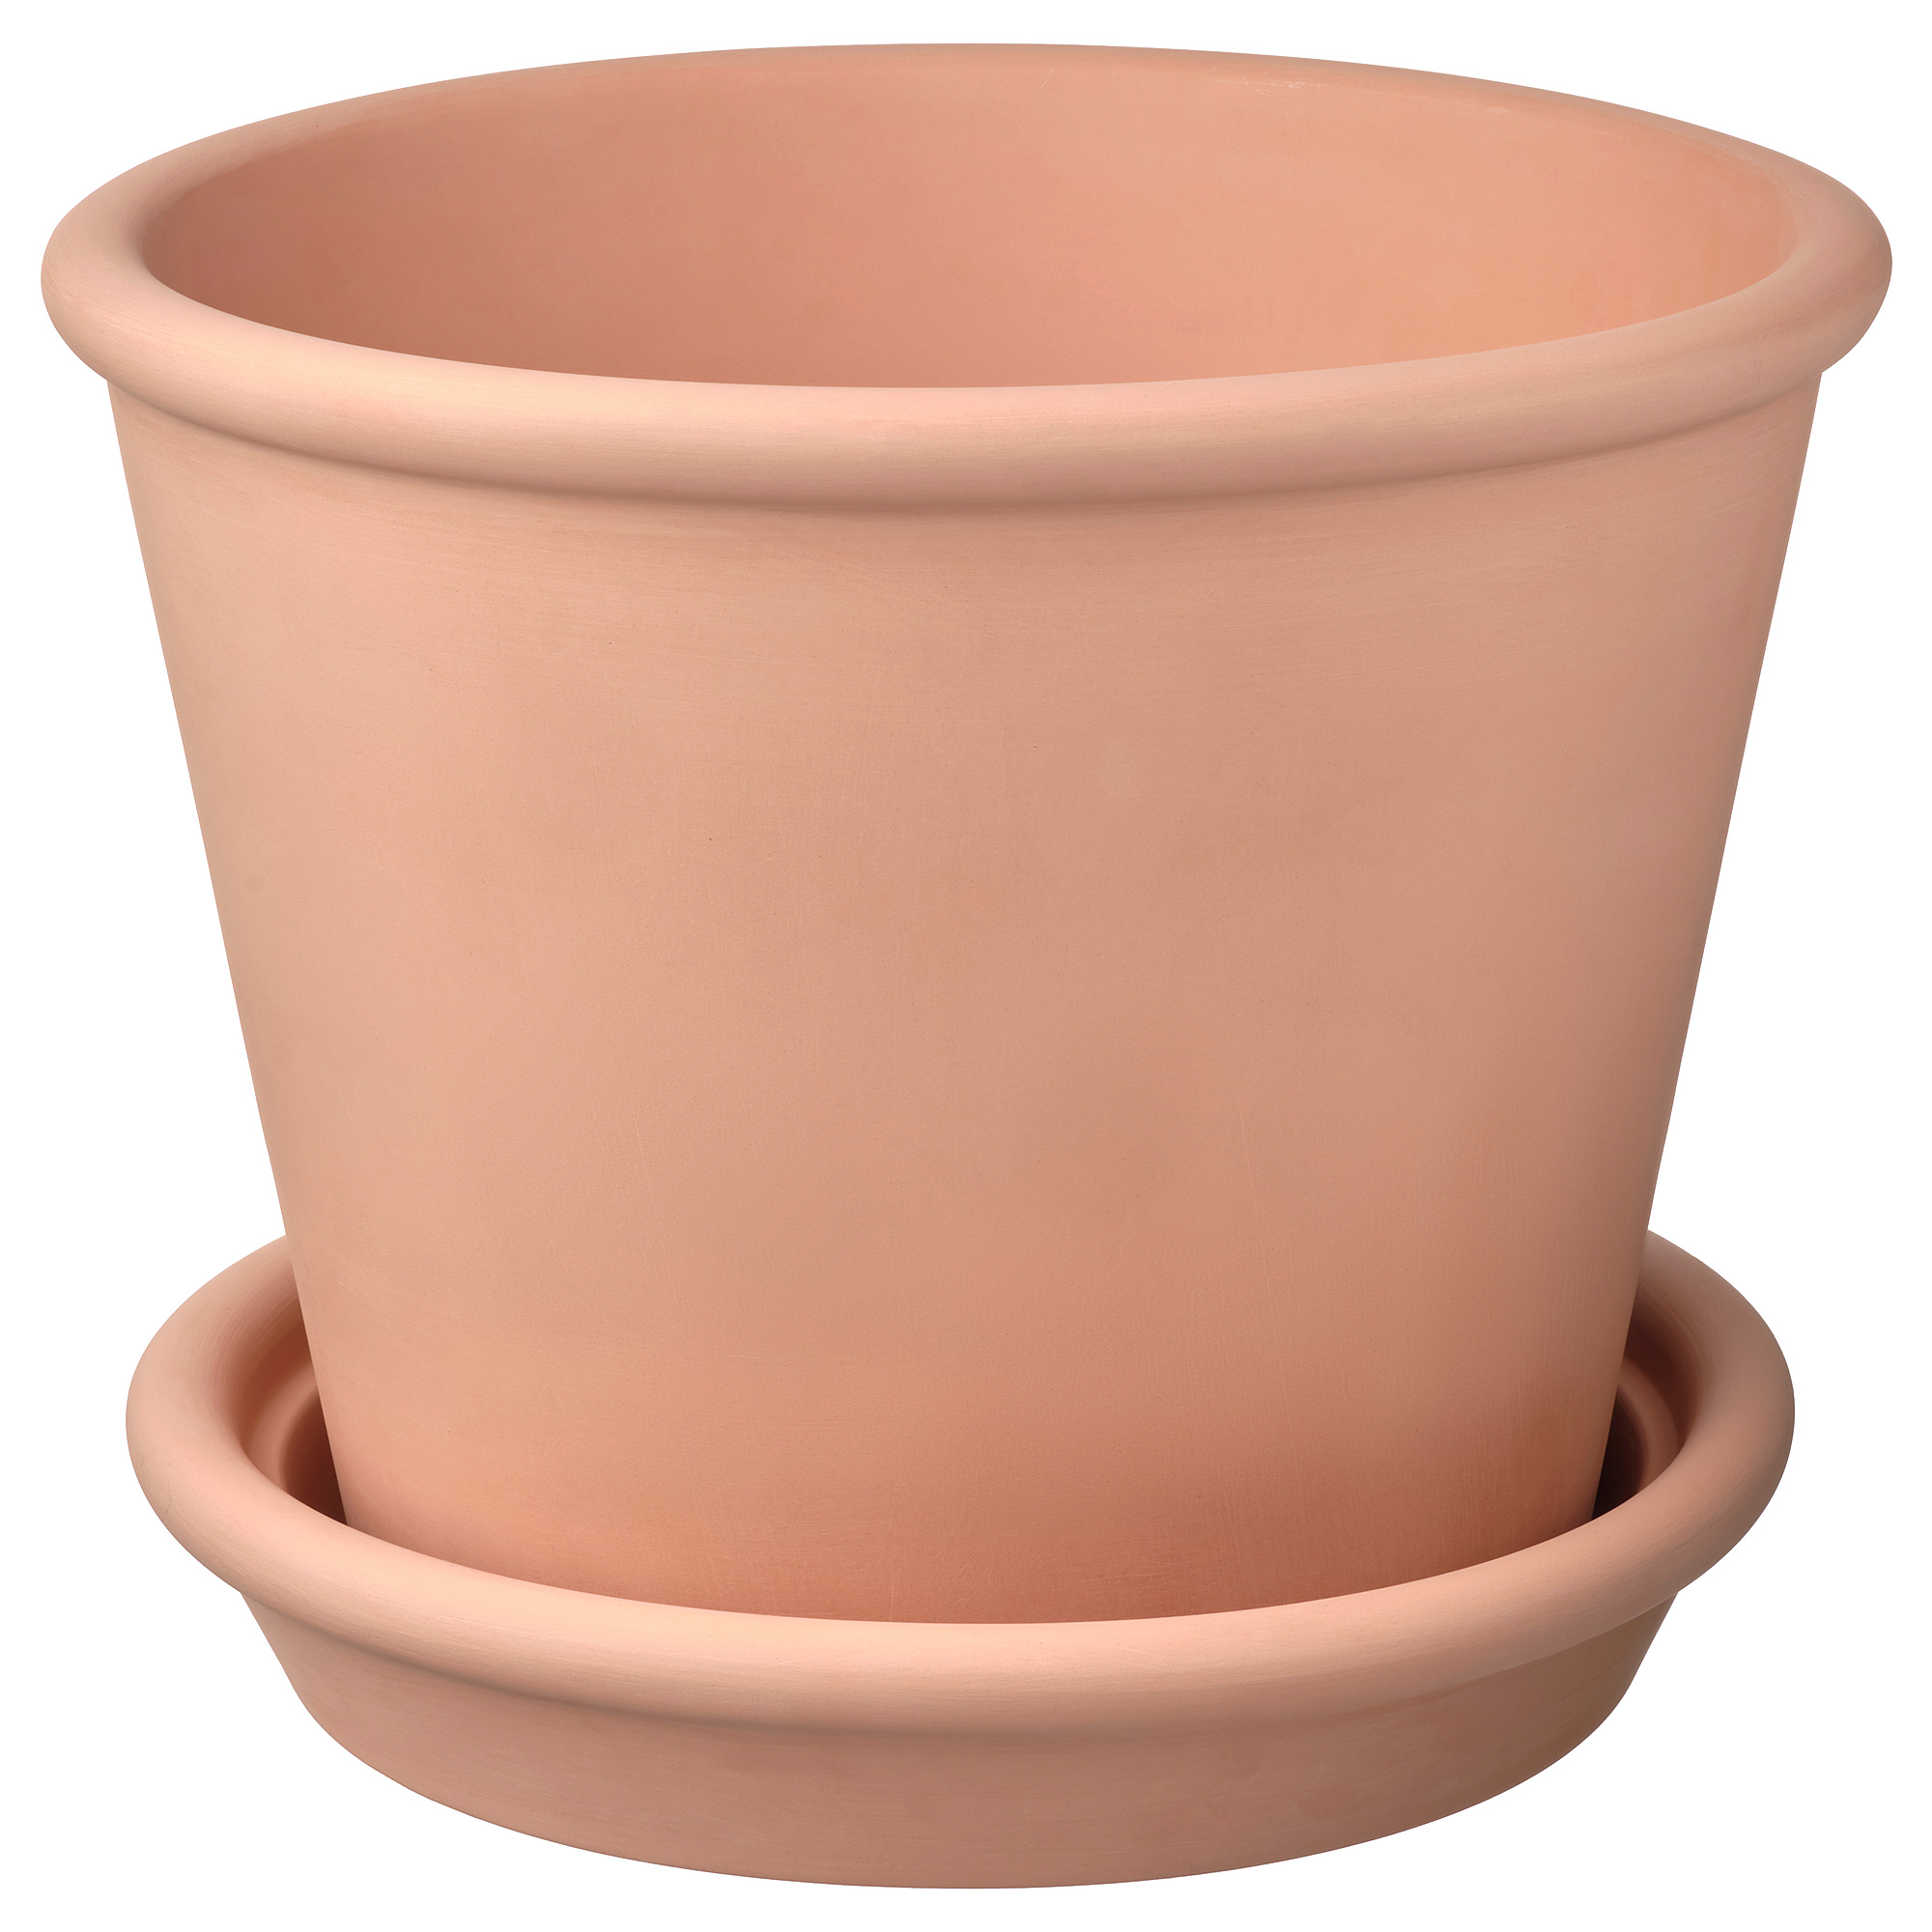 MUSKOTBLOMMA plant pot with saucer